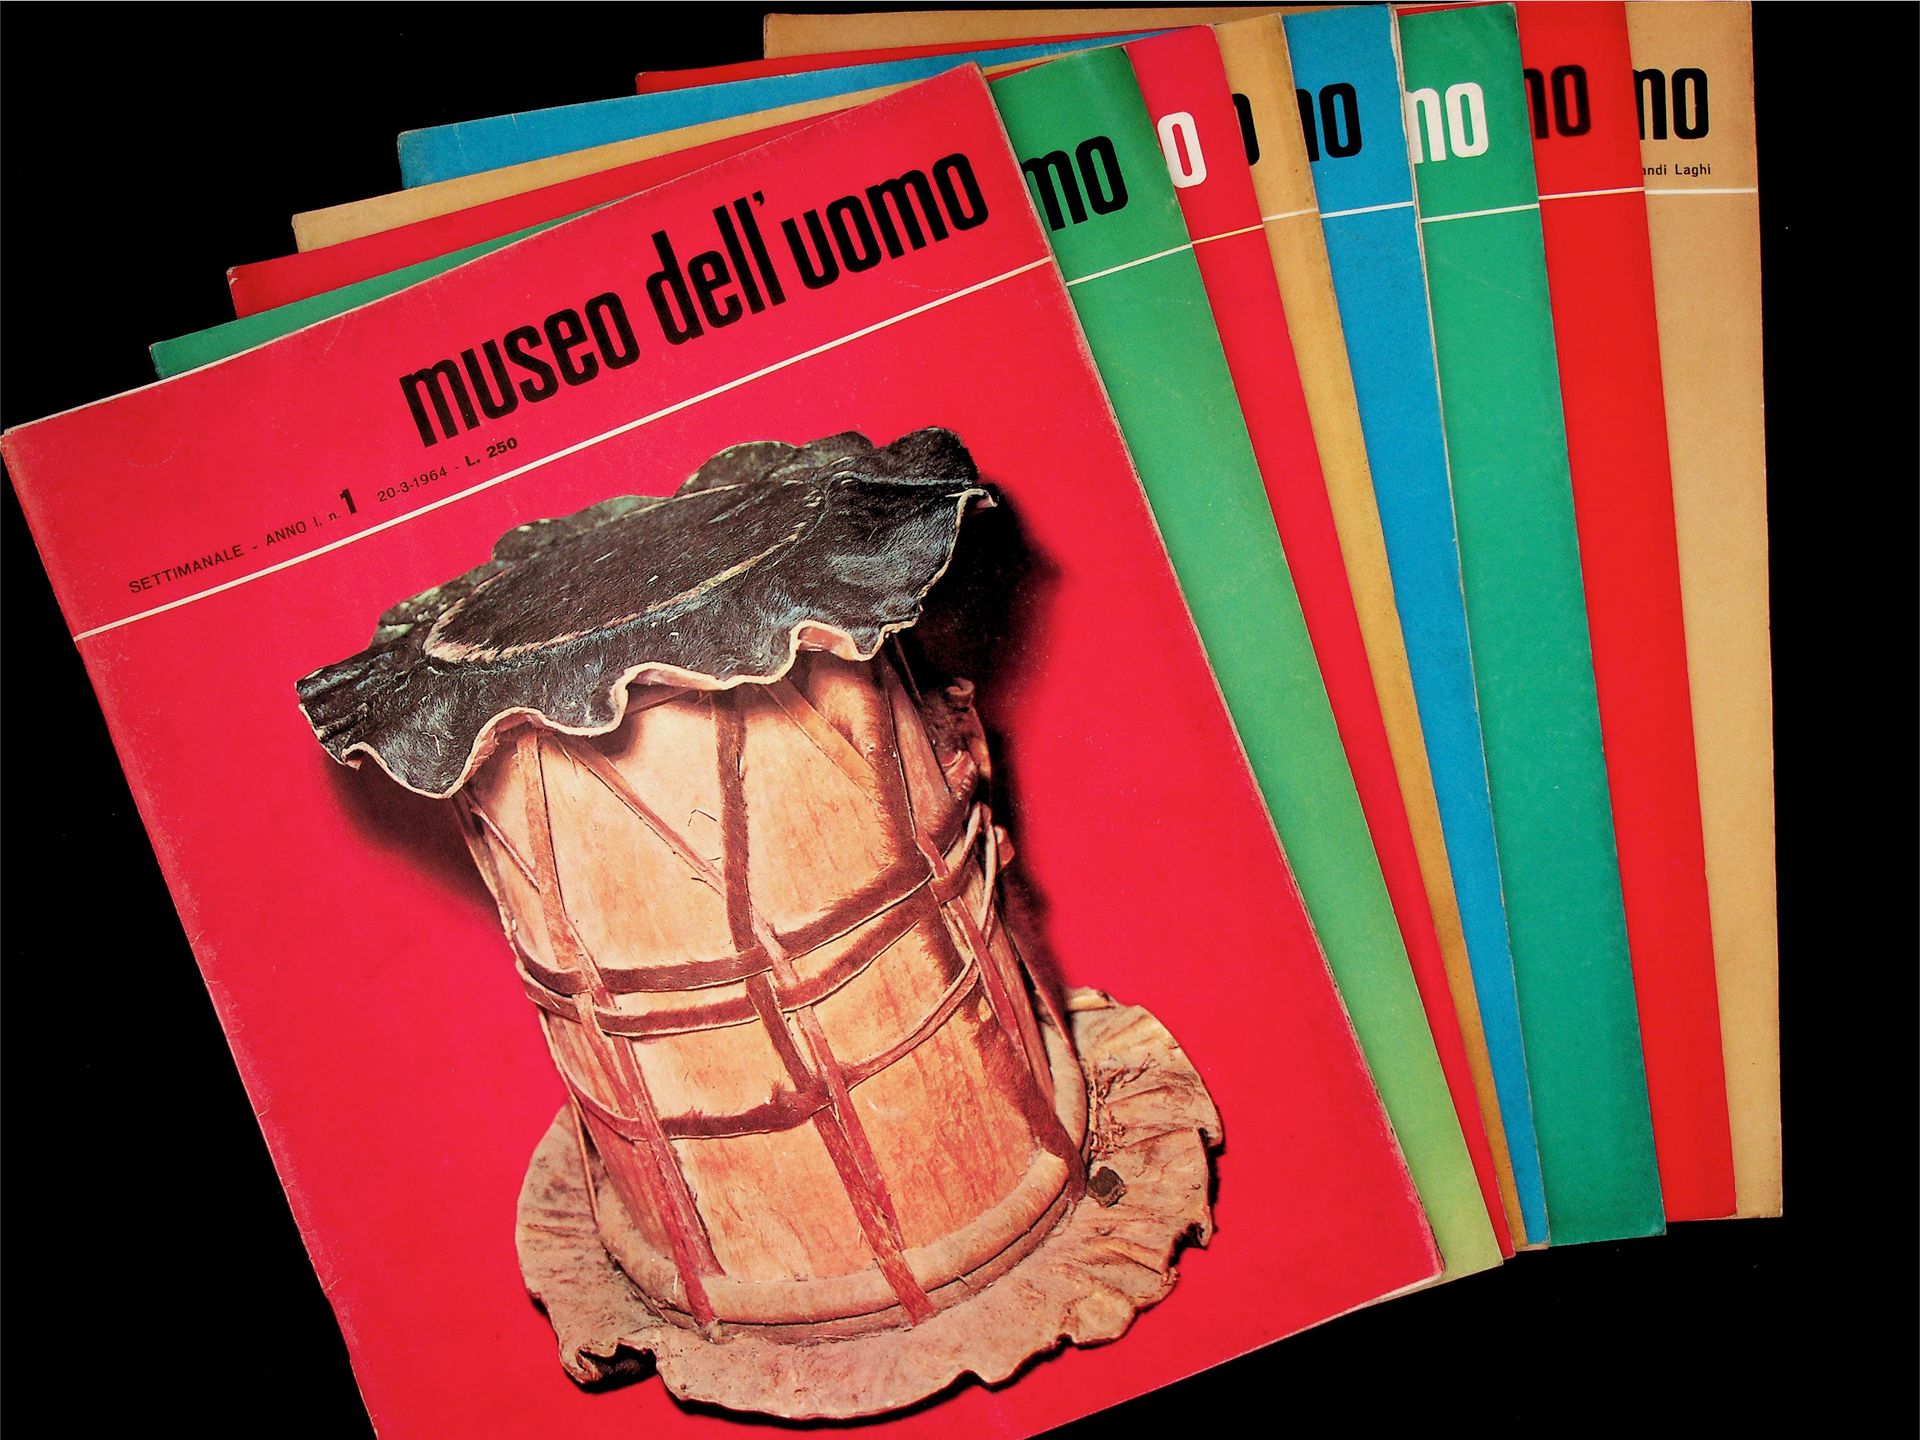 8 Magazines (Museo dell Uomo 1-8) 8本杂志(Museo dell Uomo 1-8)

Ohne Sockel / 无底座

&hellip;